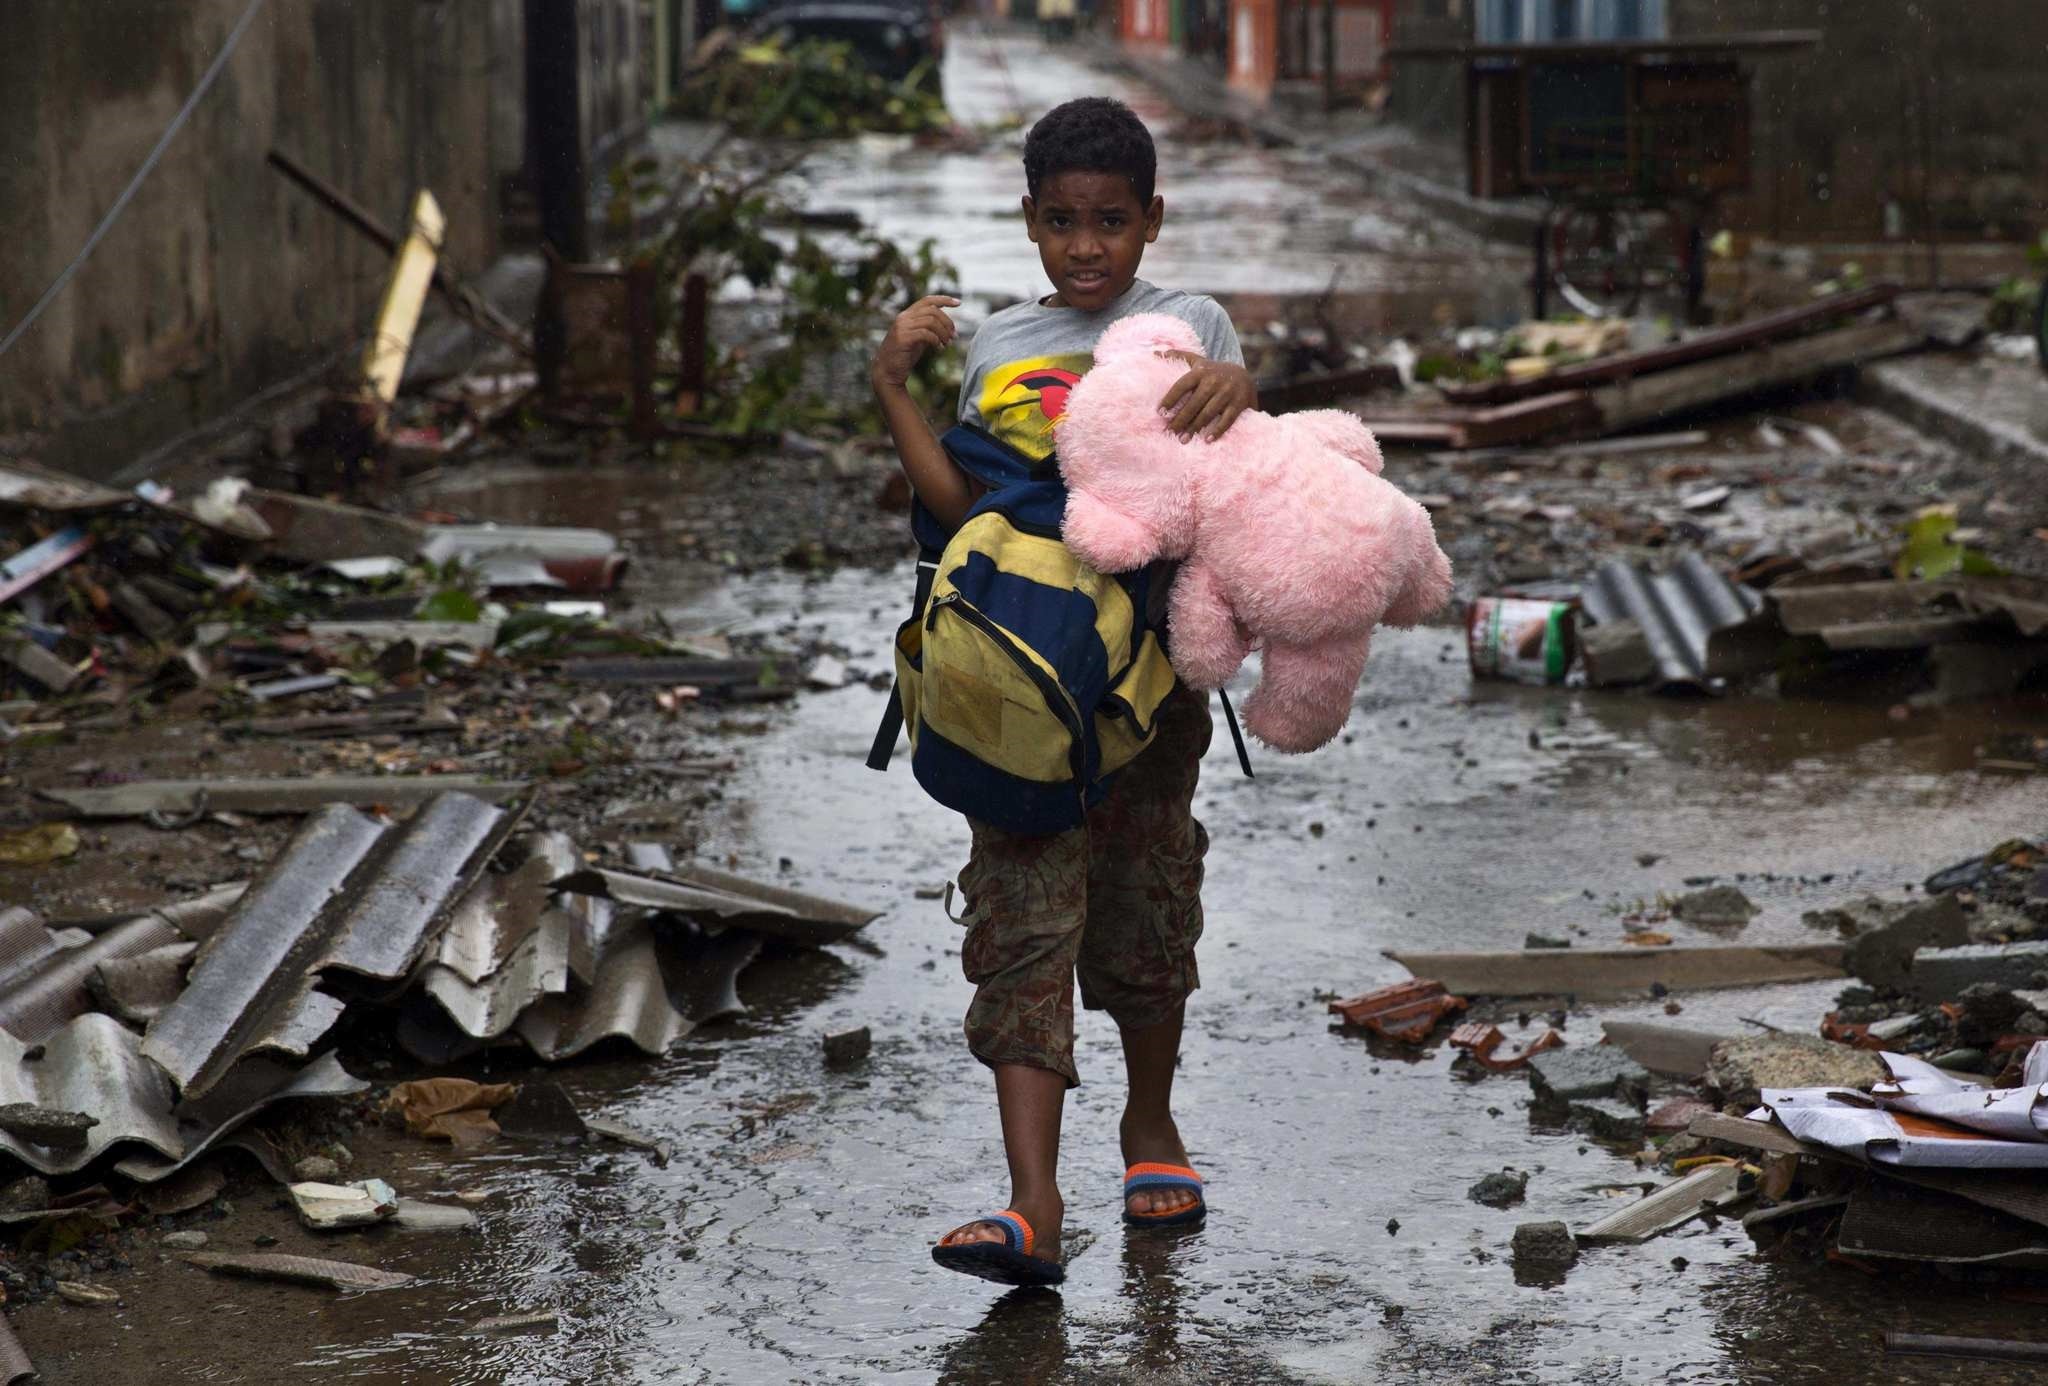 A boy walks, carrying a backpack and a teddy bear, through a street littered with debris the morning after Hurricane Matthew drove across Baracoa, Cuba, Wednesday, Oct. 5, 2016. (AP Photo)